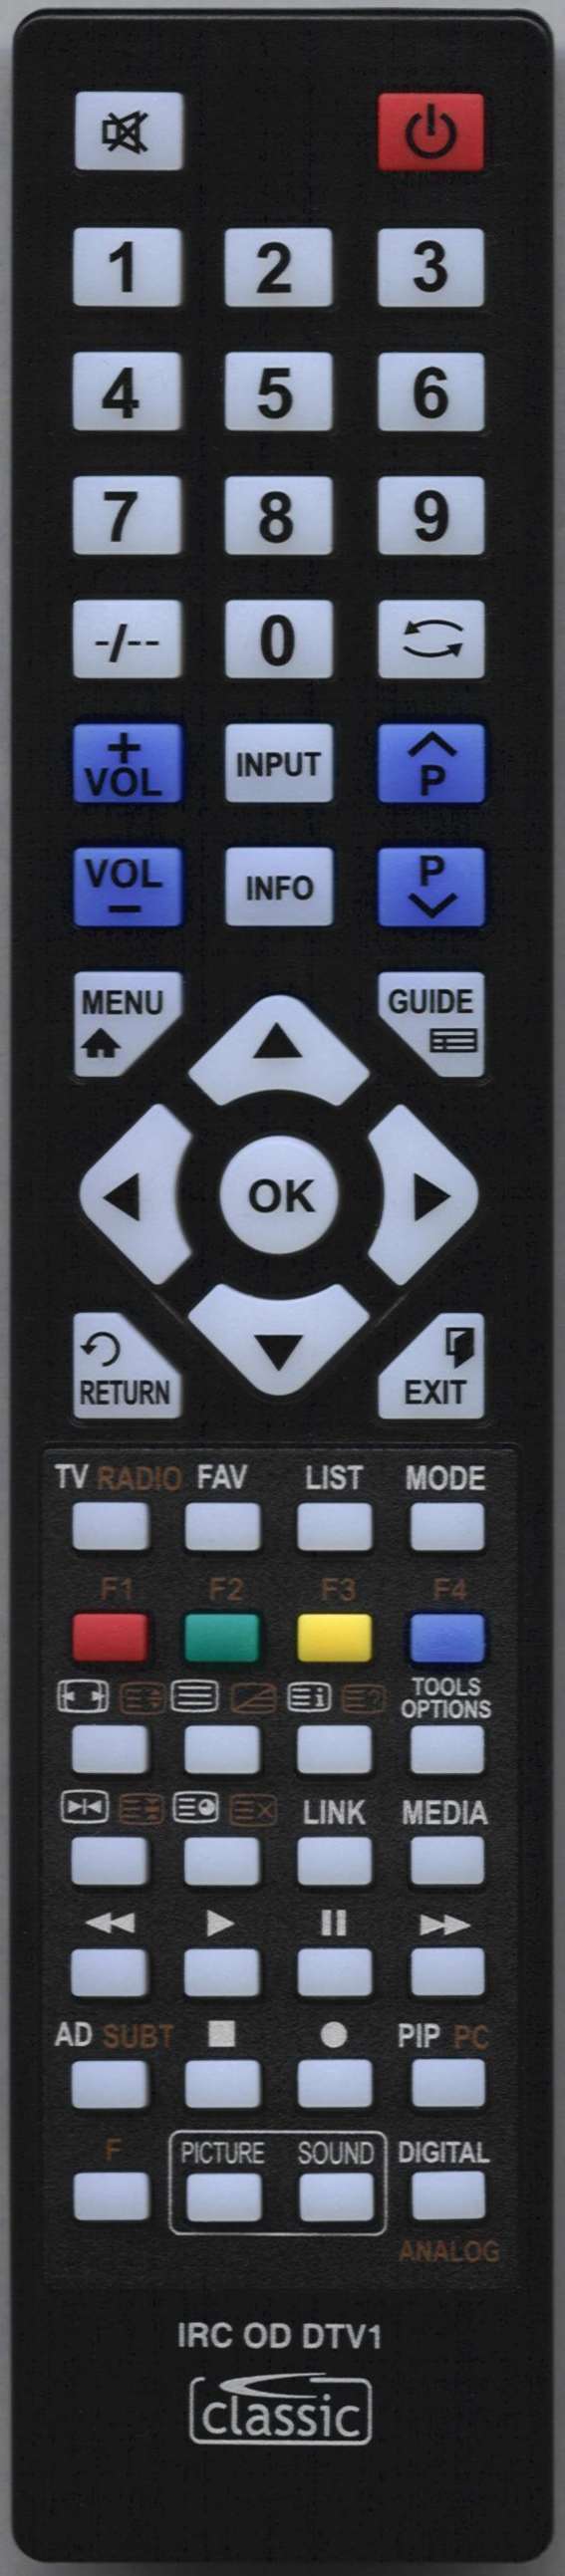 SEIKI SE24GD02UK Remote Control